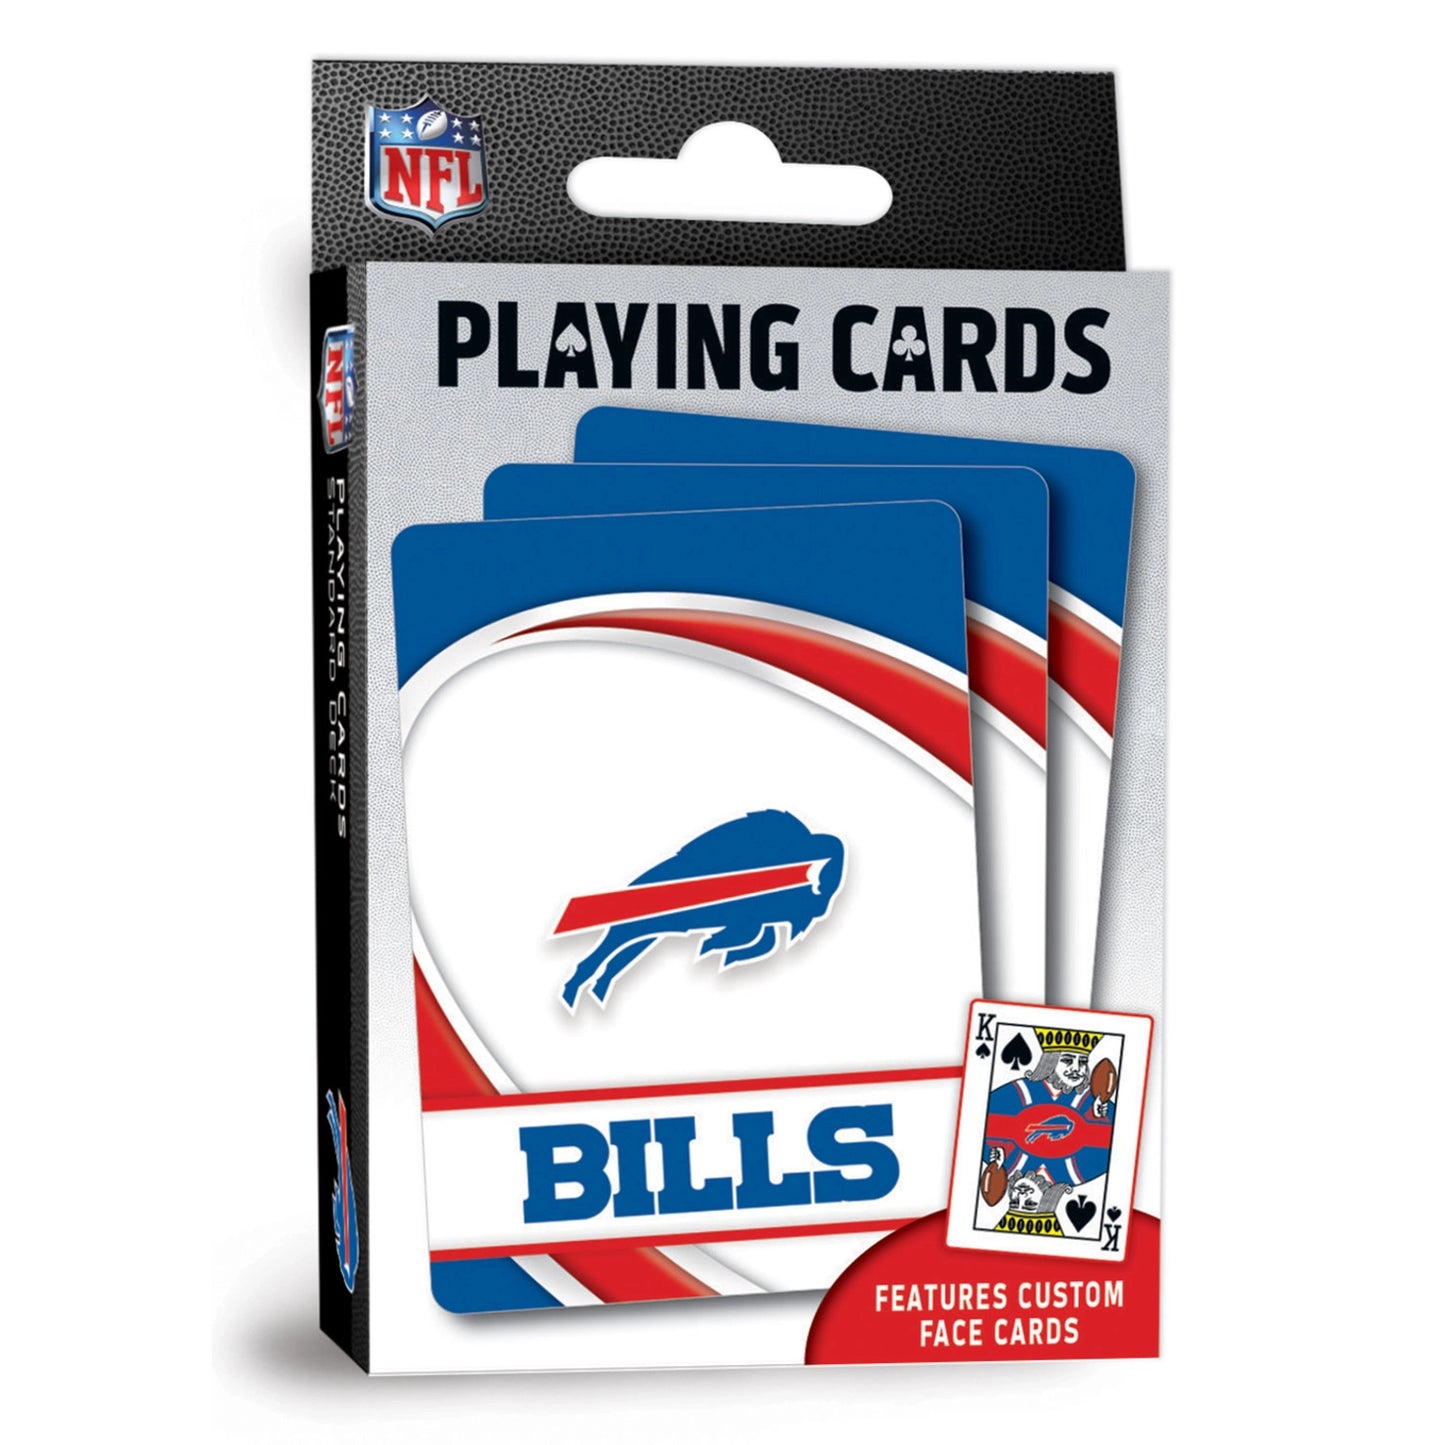 Buffalo Bills Playing Cards - Let's Go Buffalo!